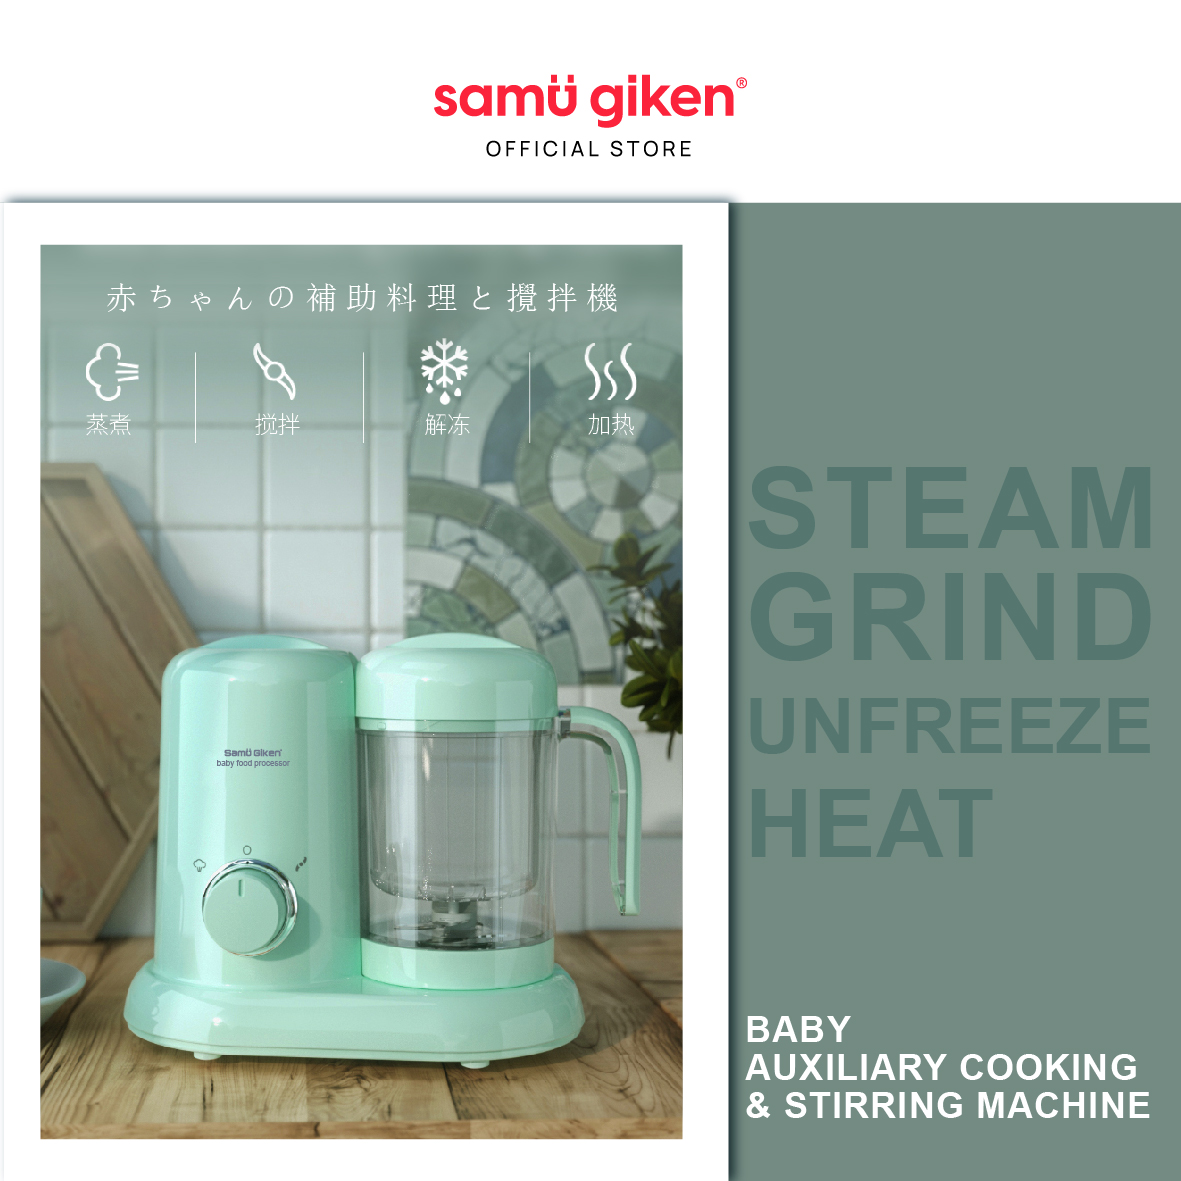 Samu Giken 4 in 1 Baby Food Processor Maker Mixer Blender - Heating / Steam / Defrost / Blend, Model:BFP0688 + 1 Year Warranty